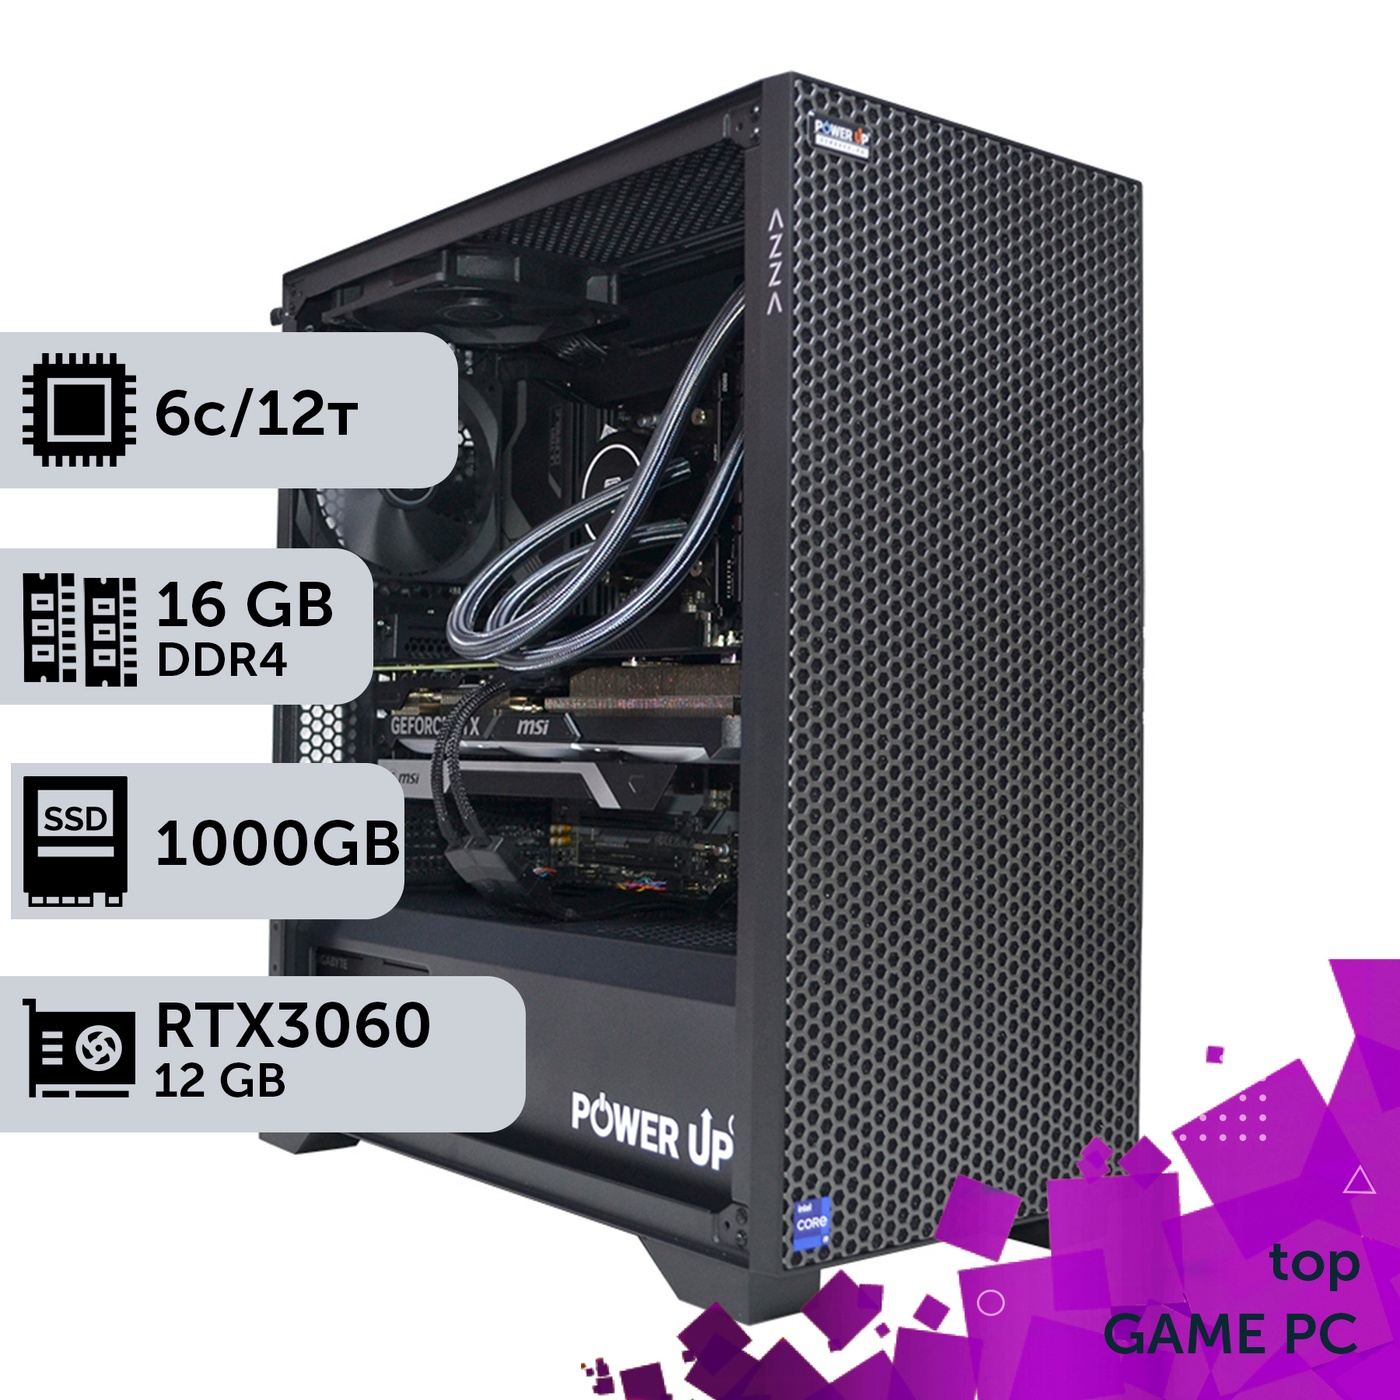 Игровой компьютер GamePC TOP #206 Core i5 12400F/16 GB/HDD 1 TB/SSD 1TB/GeForce RTX 3060 12GB